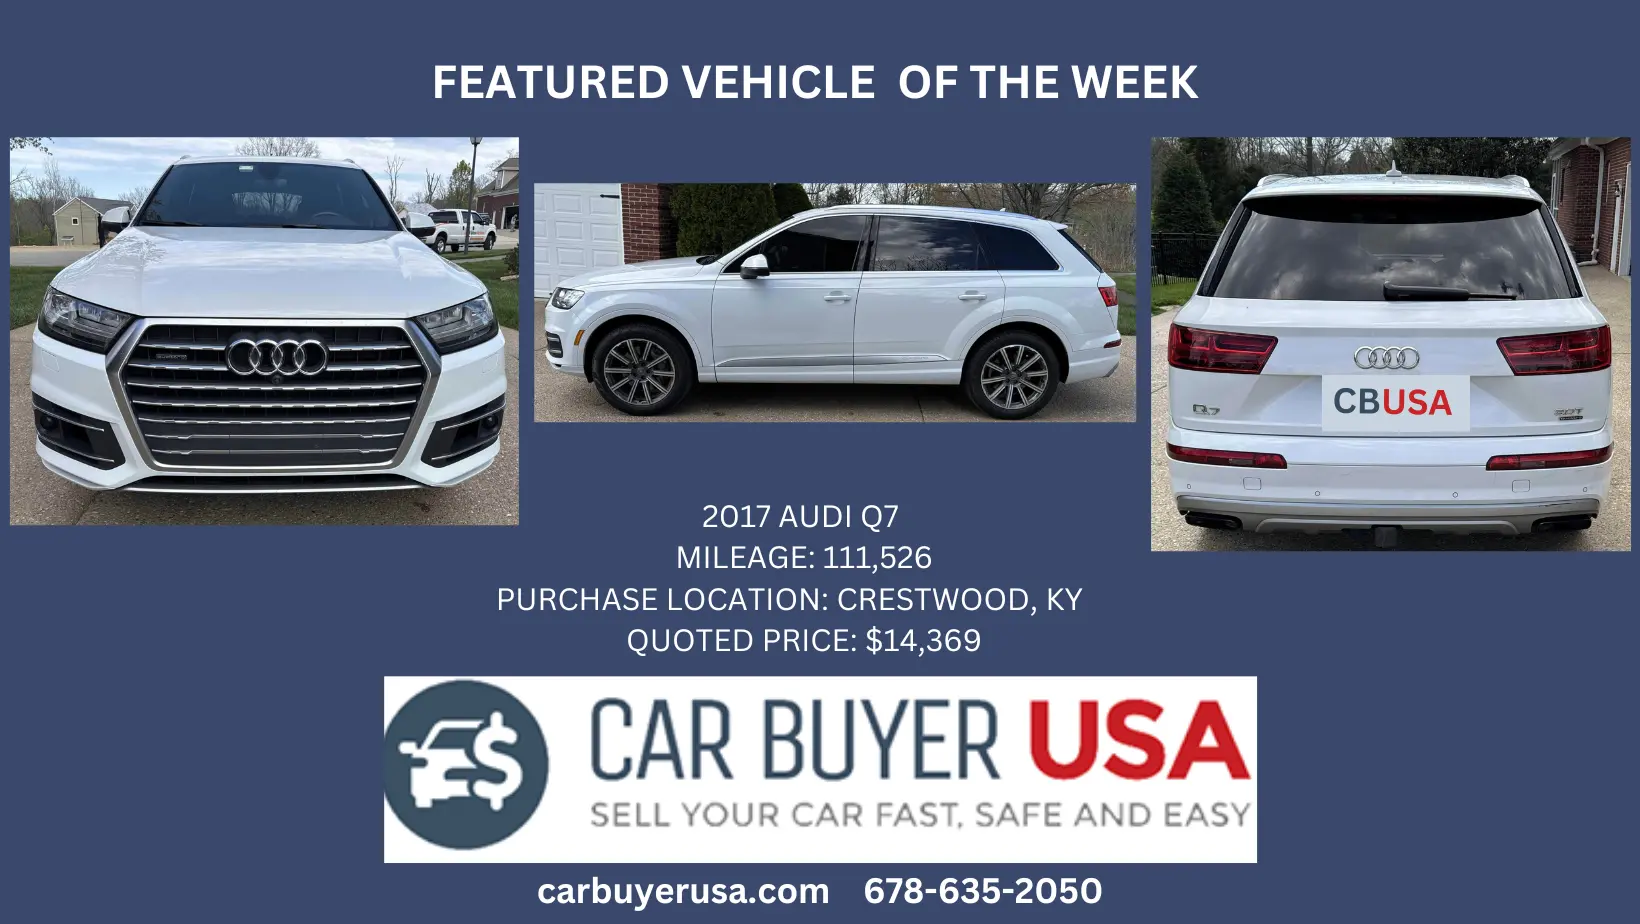 Car Buyer USA - 2017 Audi Q7 V6, Crestwood, KY - $14,369